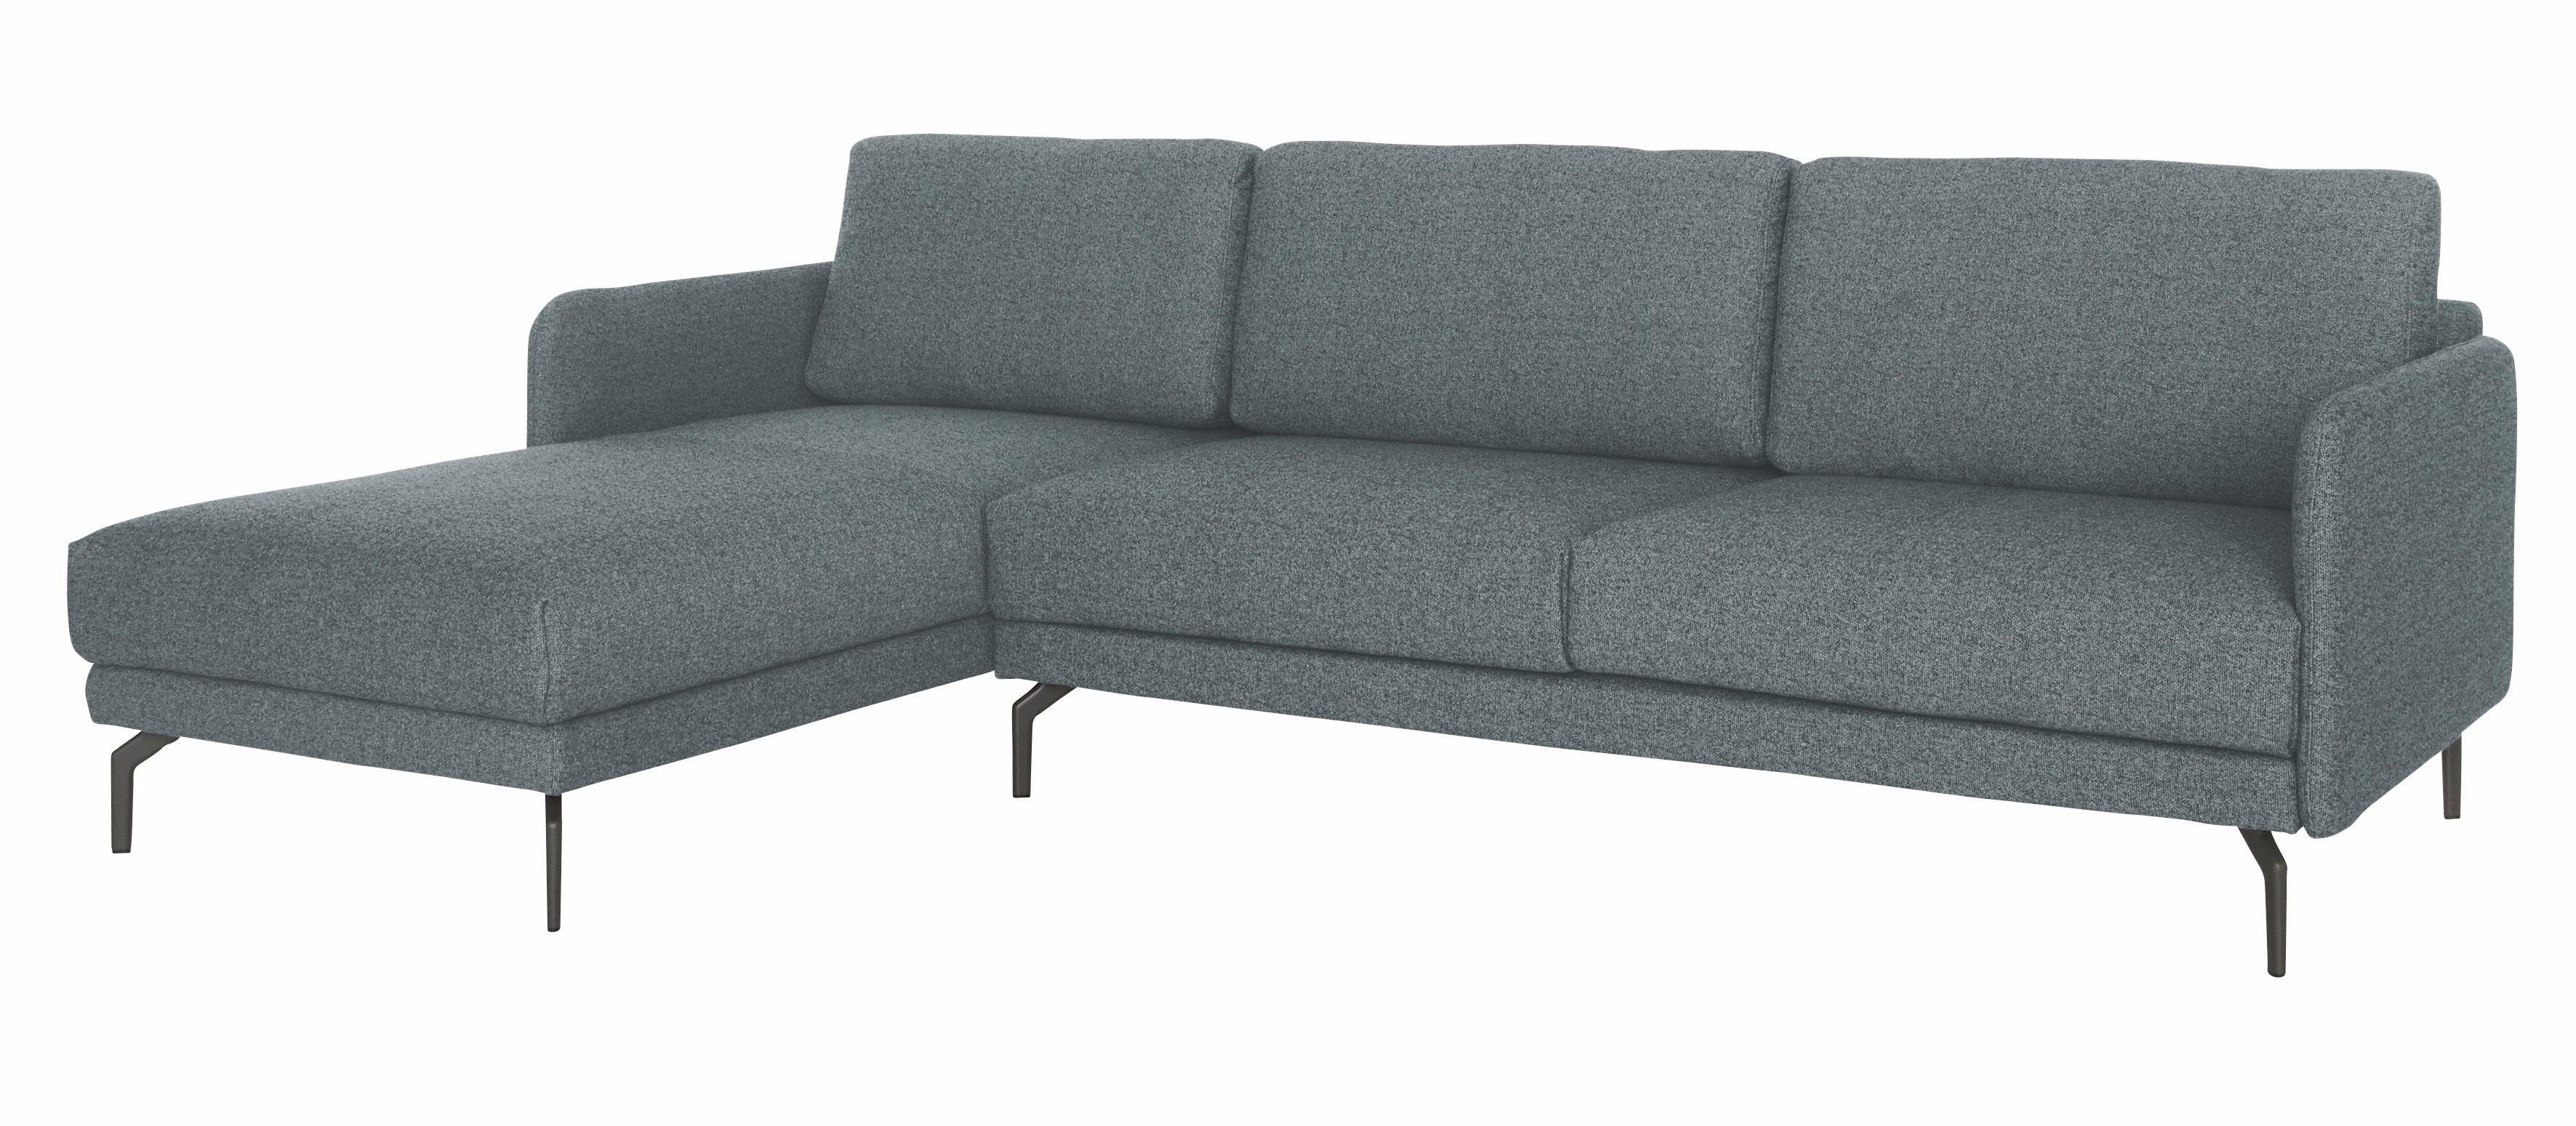 sofa umbragrau schmal, cm, 234 hs.450, sehr in Alugussfüße Breite Ecksofa hülsta Armlehne